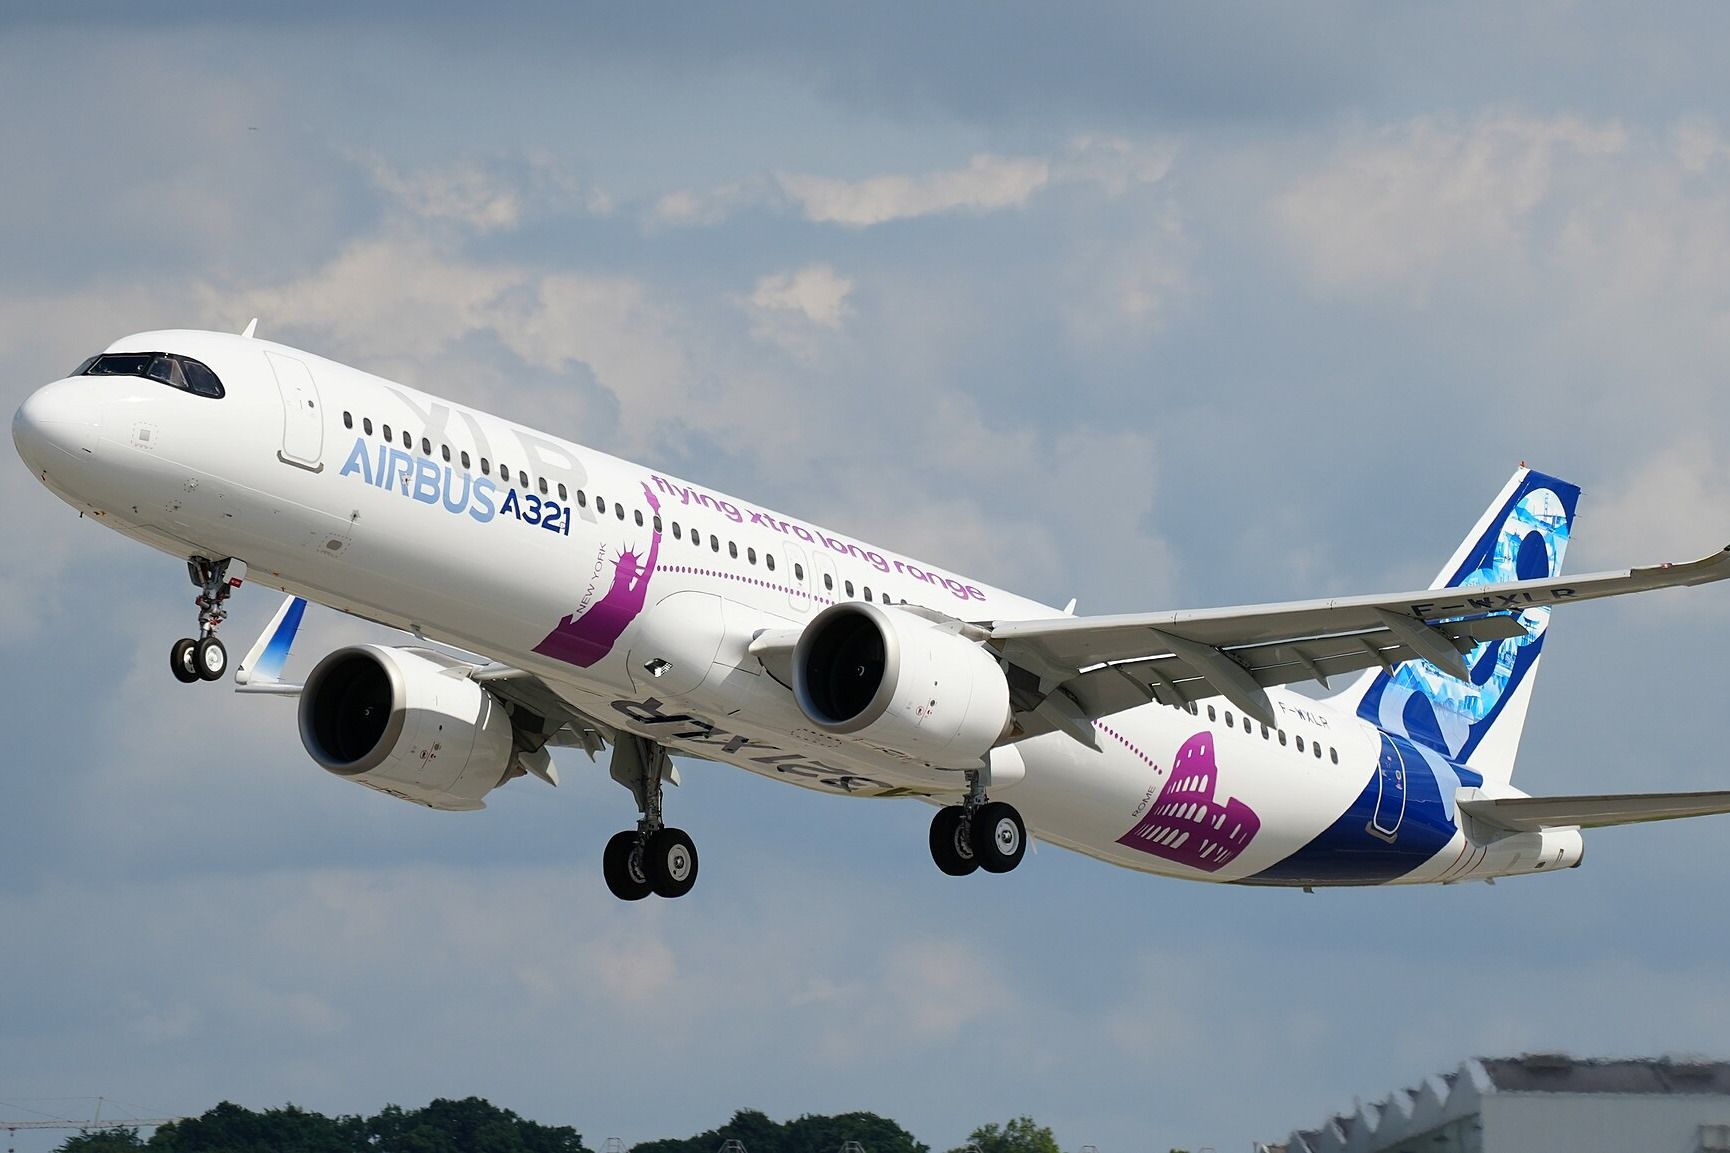 Airbus A321XLR taking off